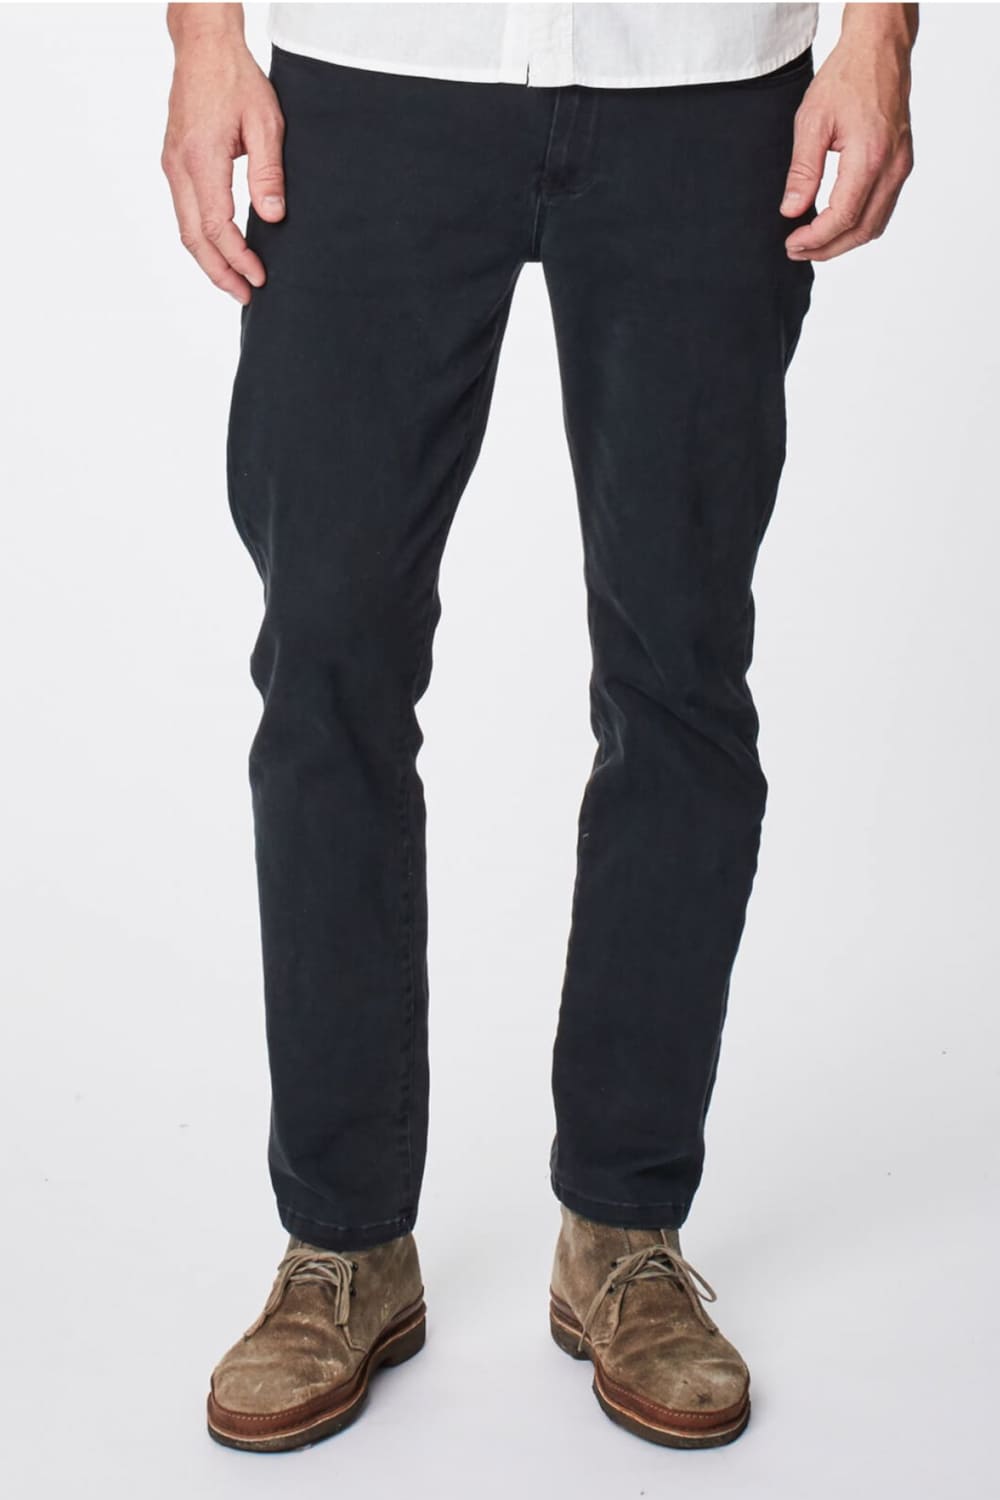 regular Jeans in dark grey